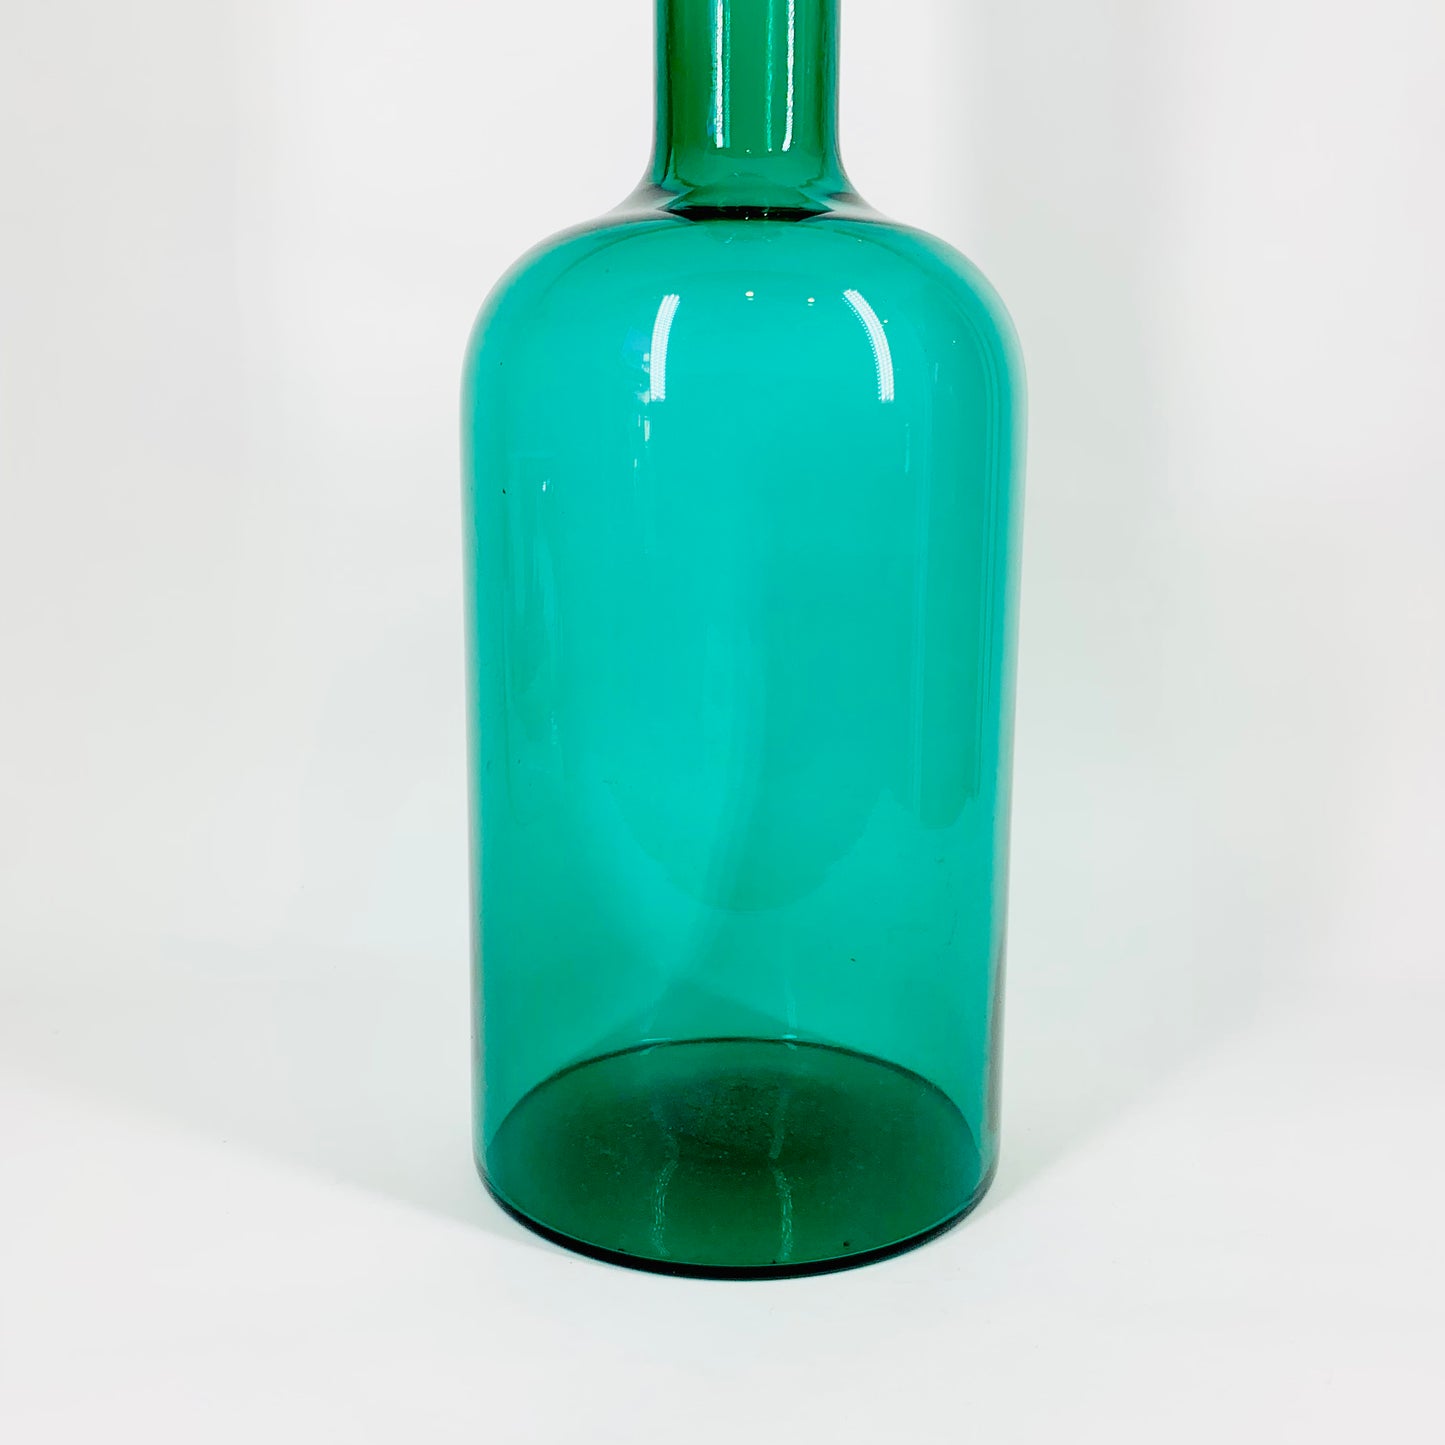 Midcentury turquoise glass bottle vase with art glass ball stopper